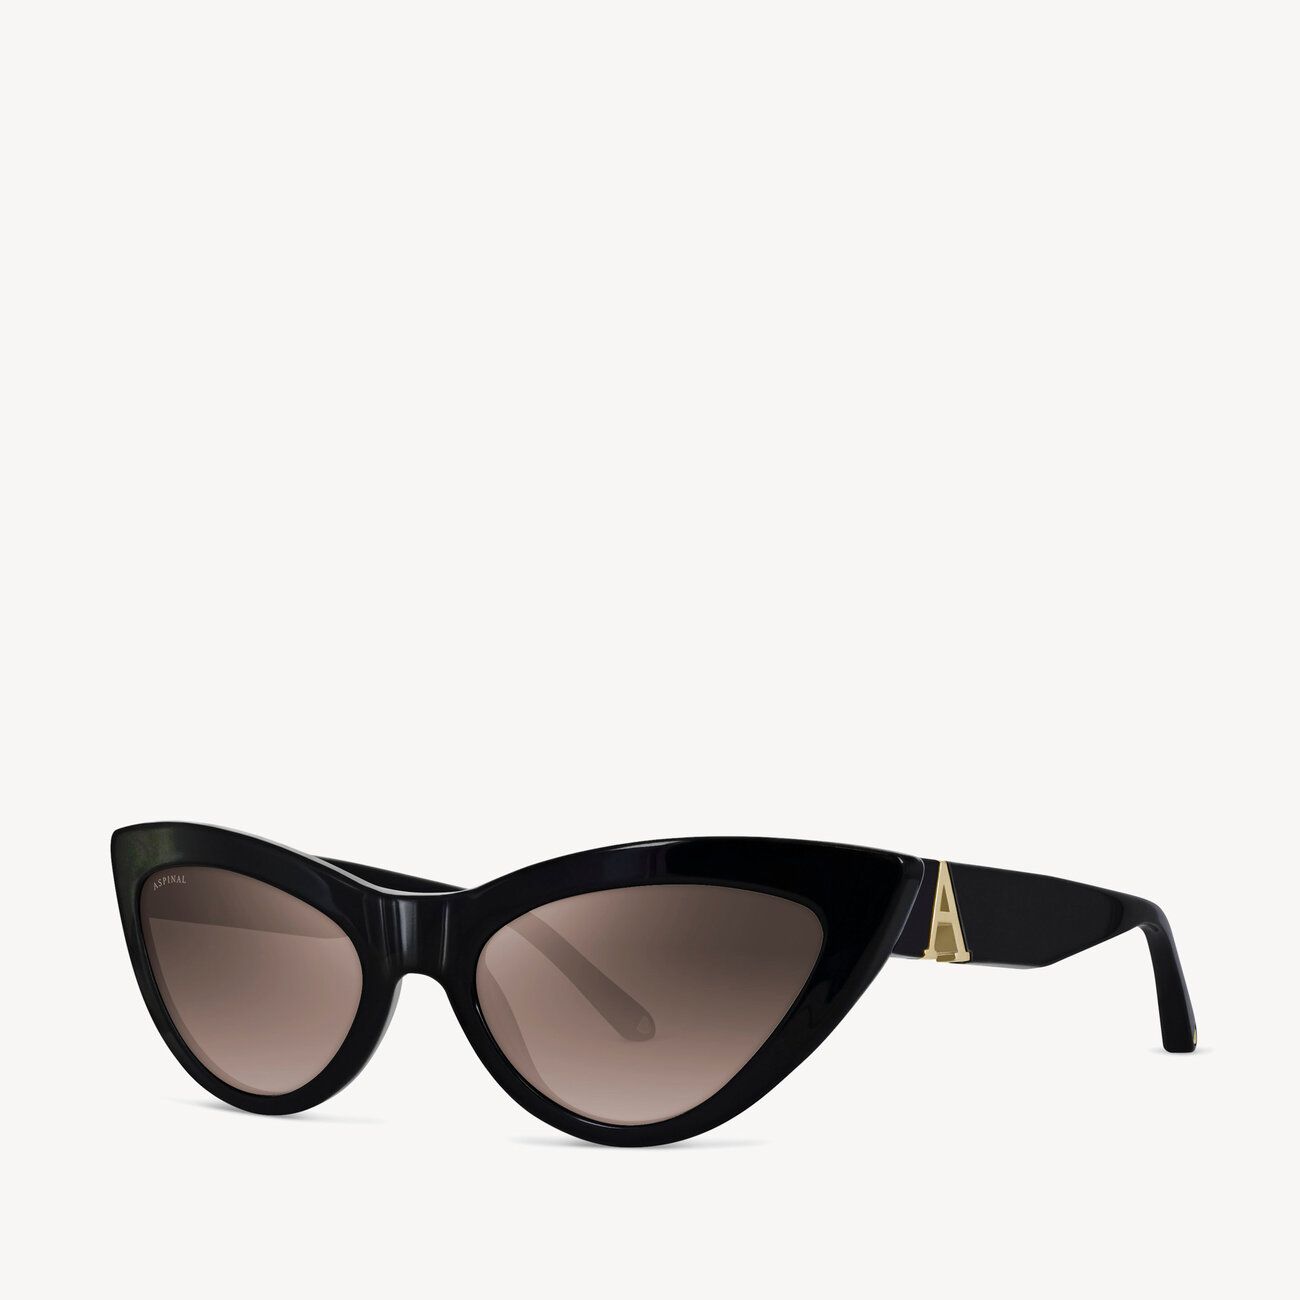 Athena Sunglasses in Black Acetate | Aspinal of London